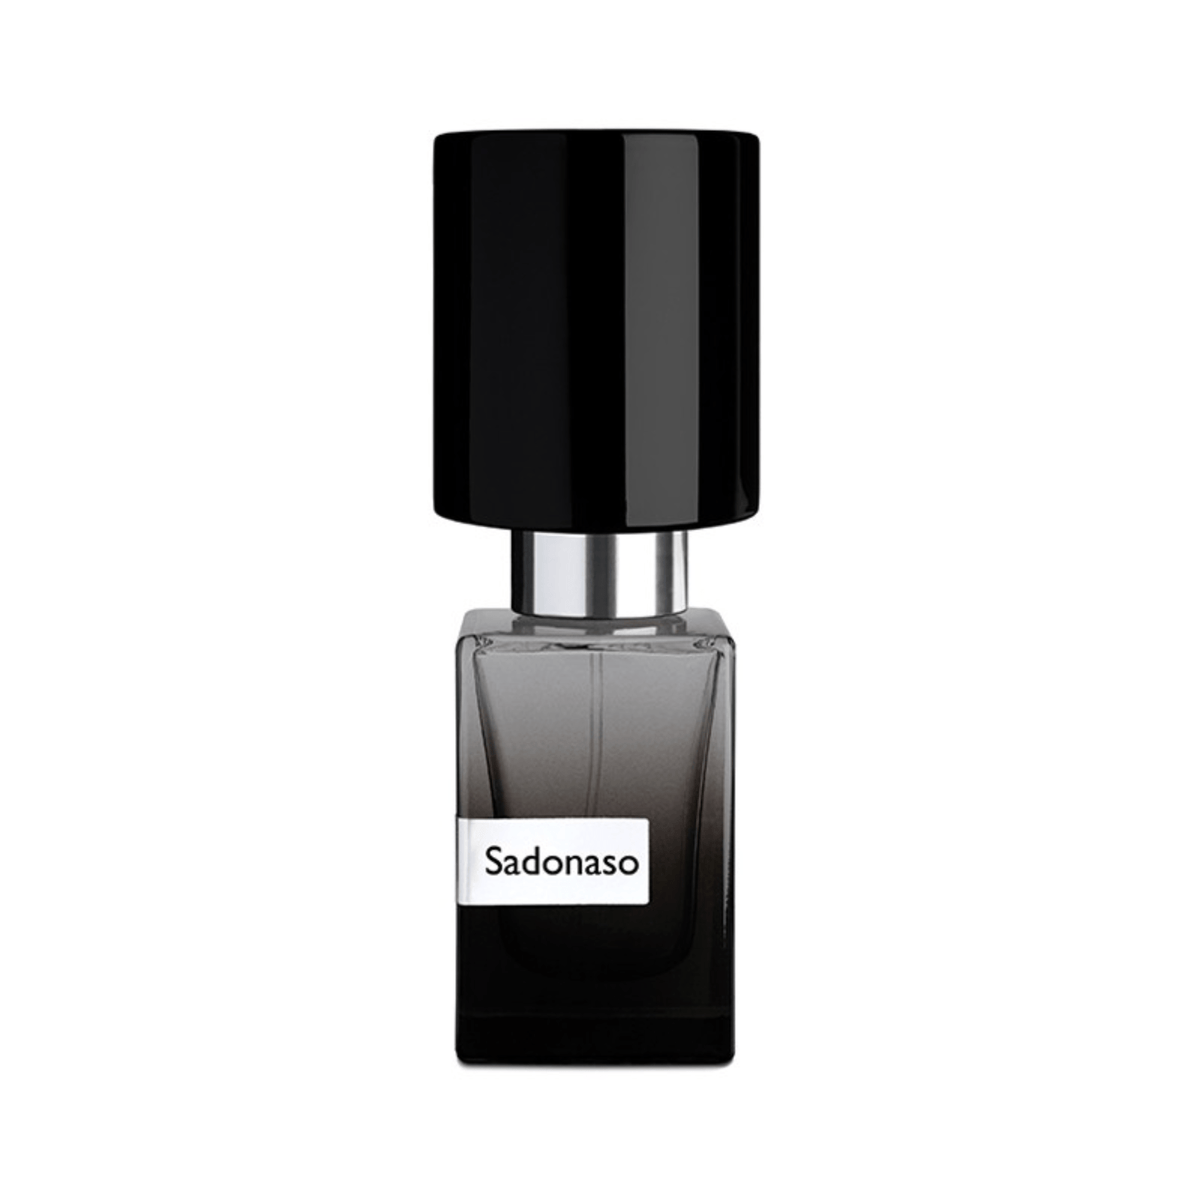 Primary Image of Sadonaso Extrait de Parfum